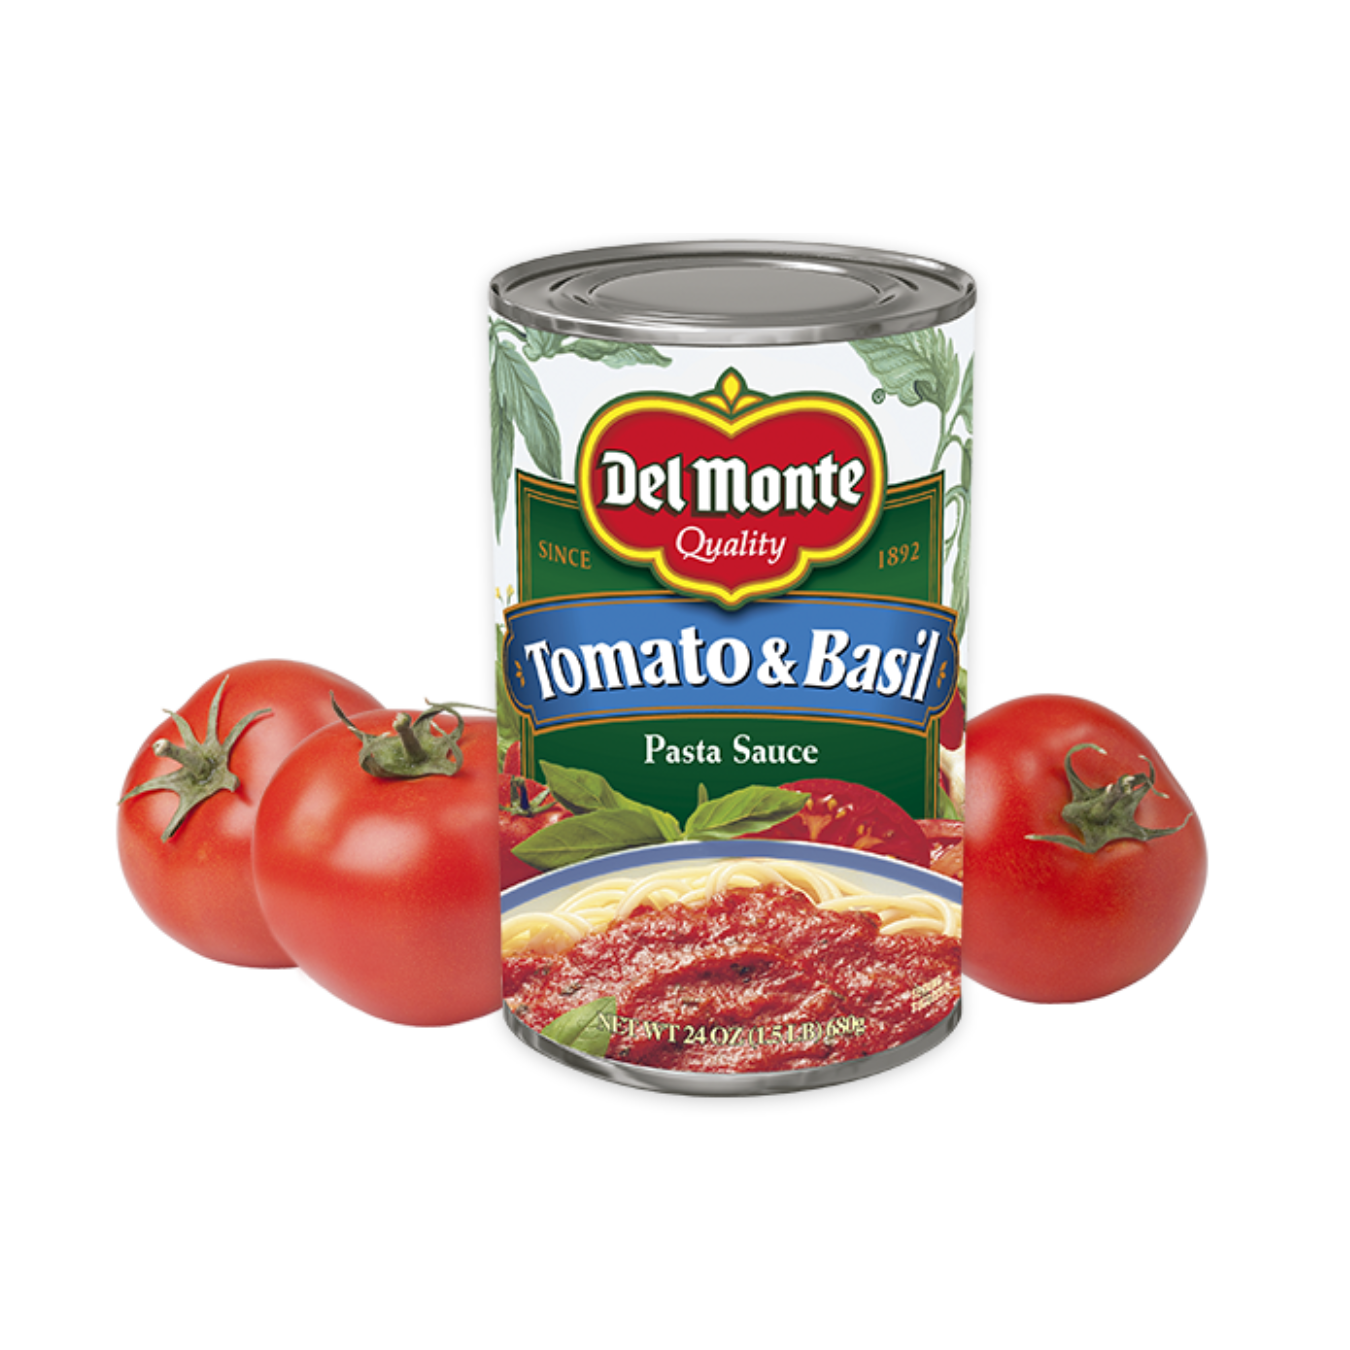 Del monte tomato & basil pastasaus